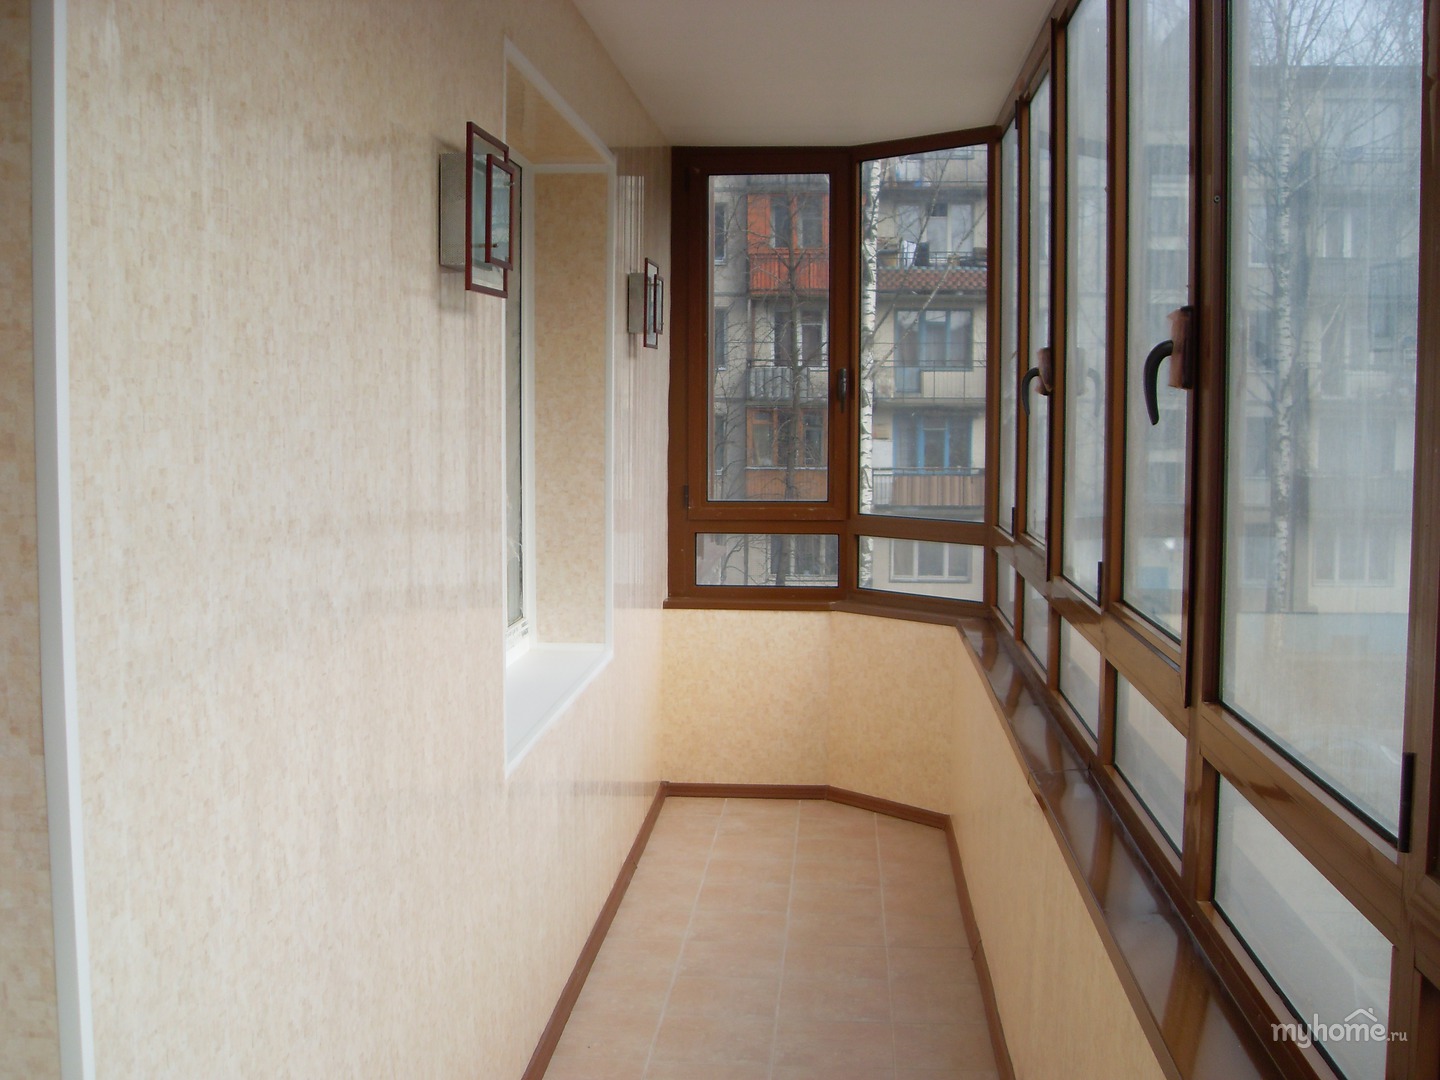 Ремонт балкона под ключ во Львове